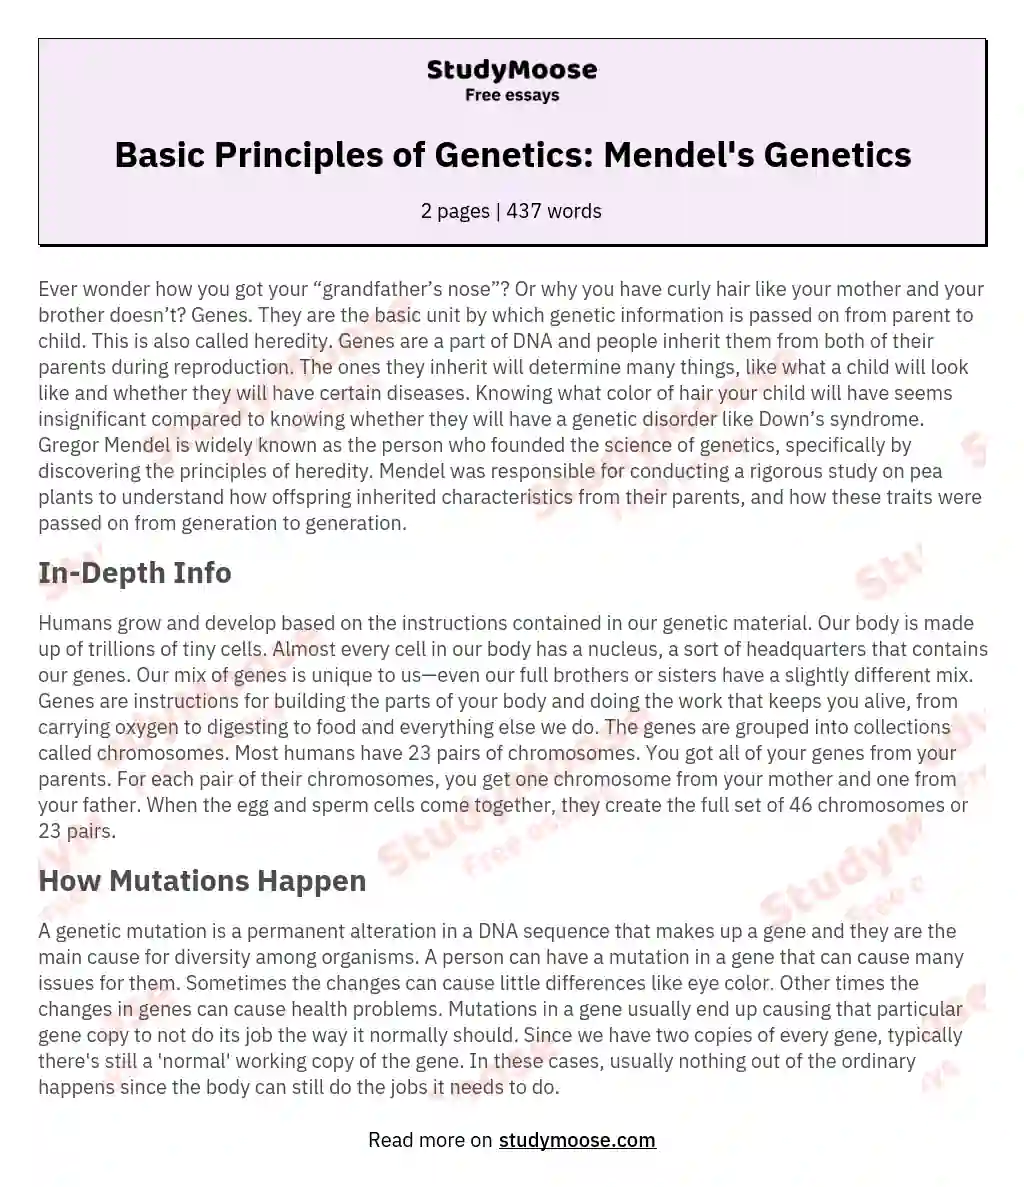 Basic Principles of Genetics: Mendel's Genetics